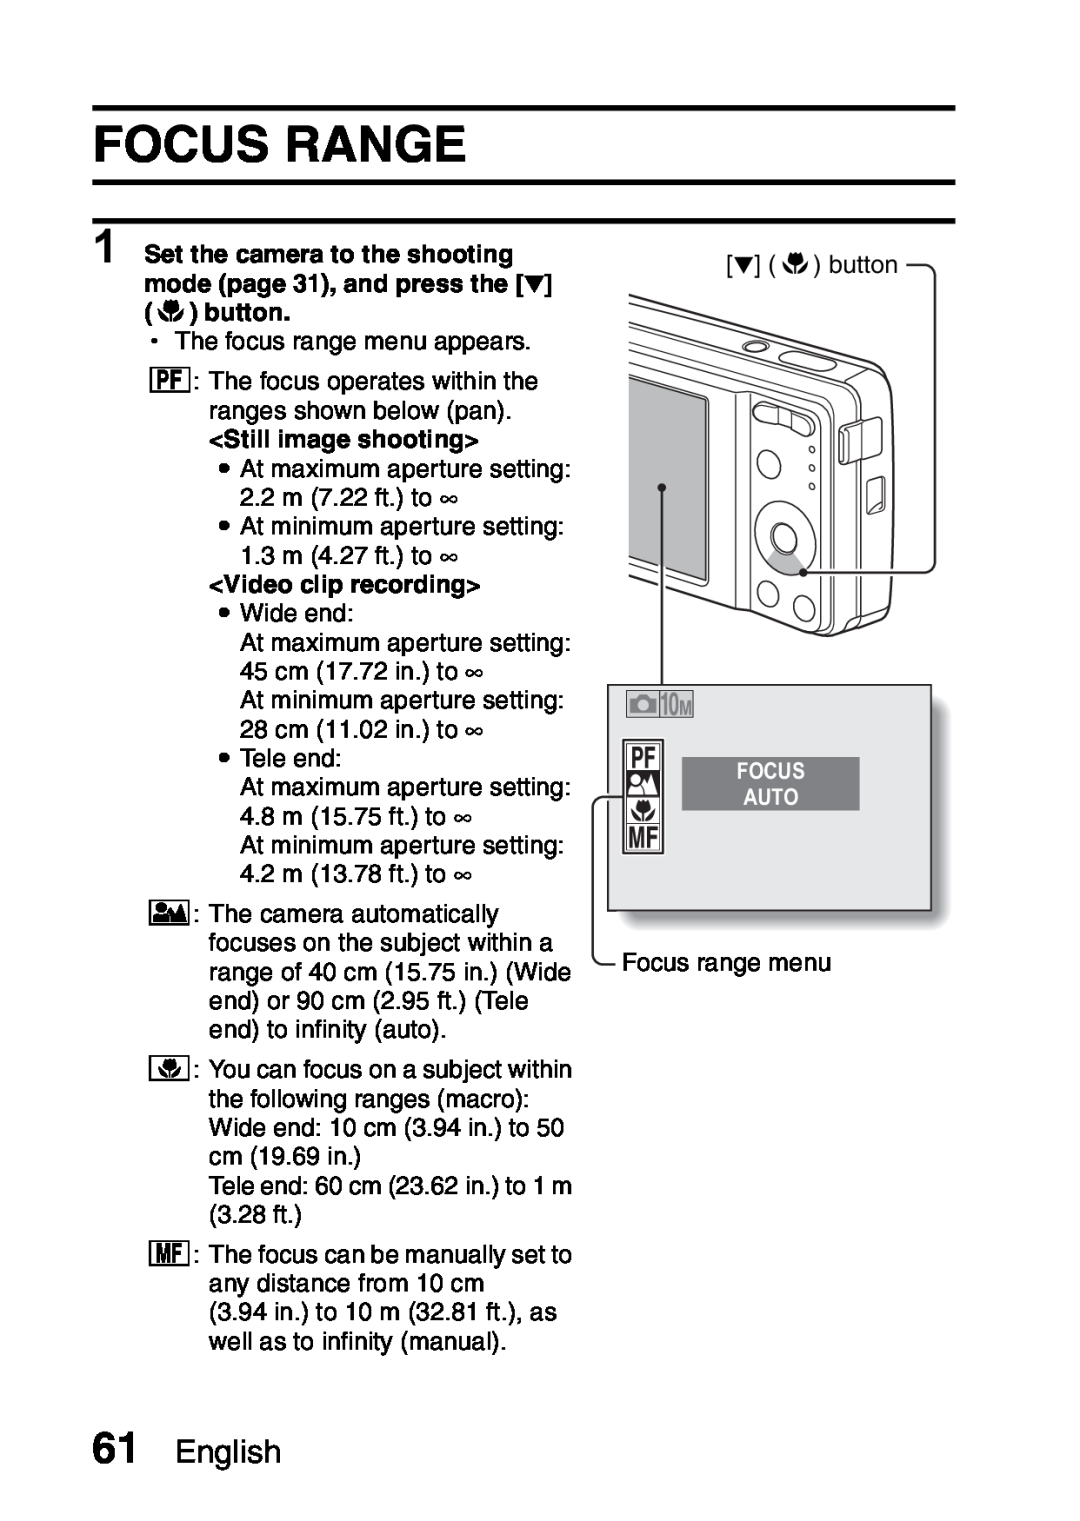 Samsung R50 instruction manual Focus Range, English, Still image shooting, Video clip recording i Wide end 